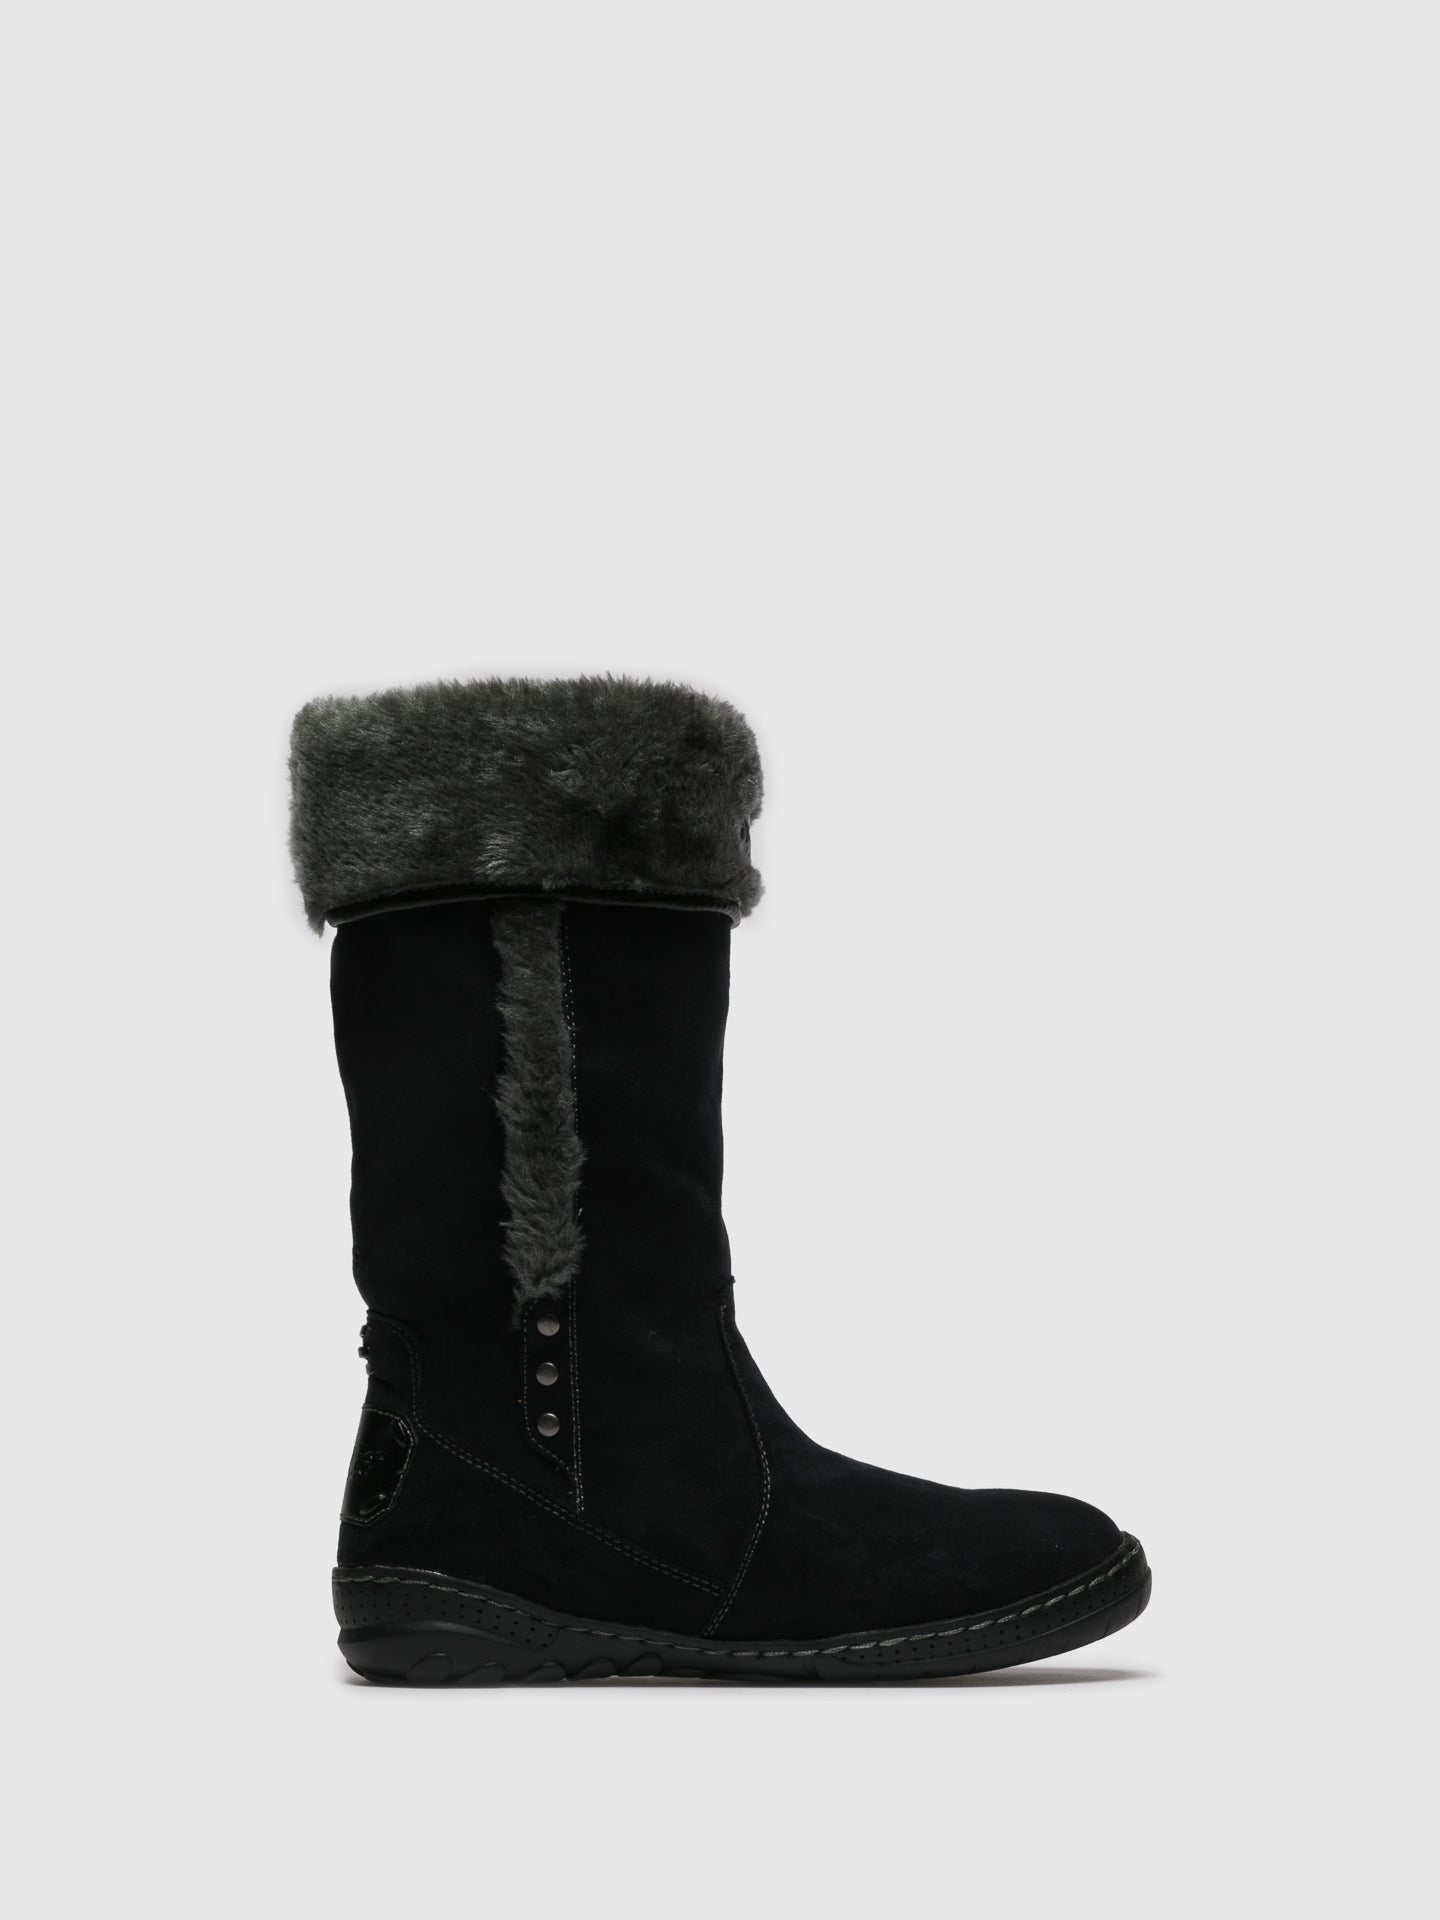 Pixie Black Fleece Boots